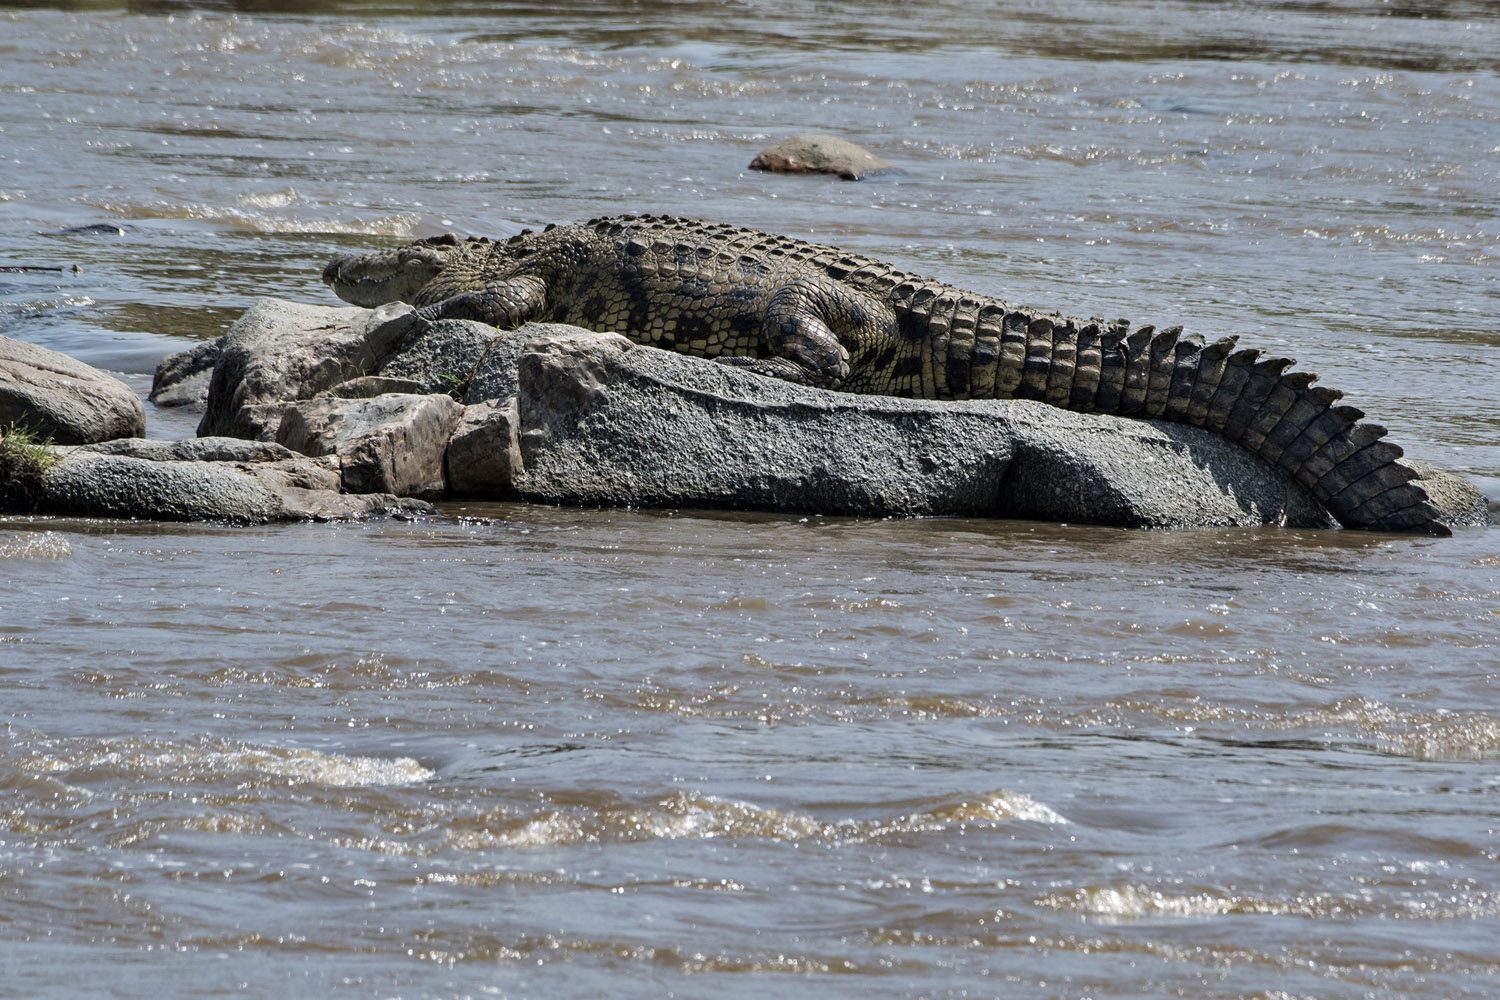 Nile Crocodile, Mara river